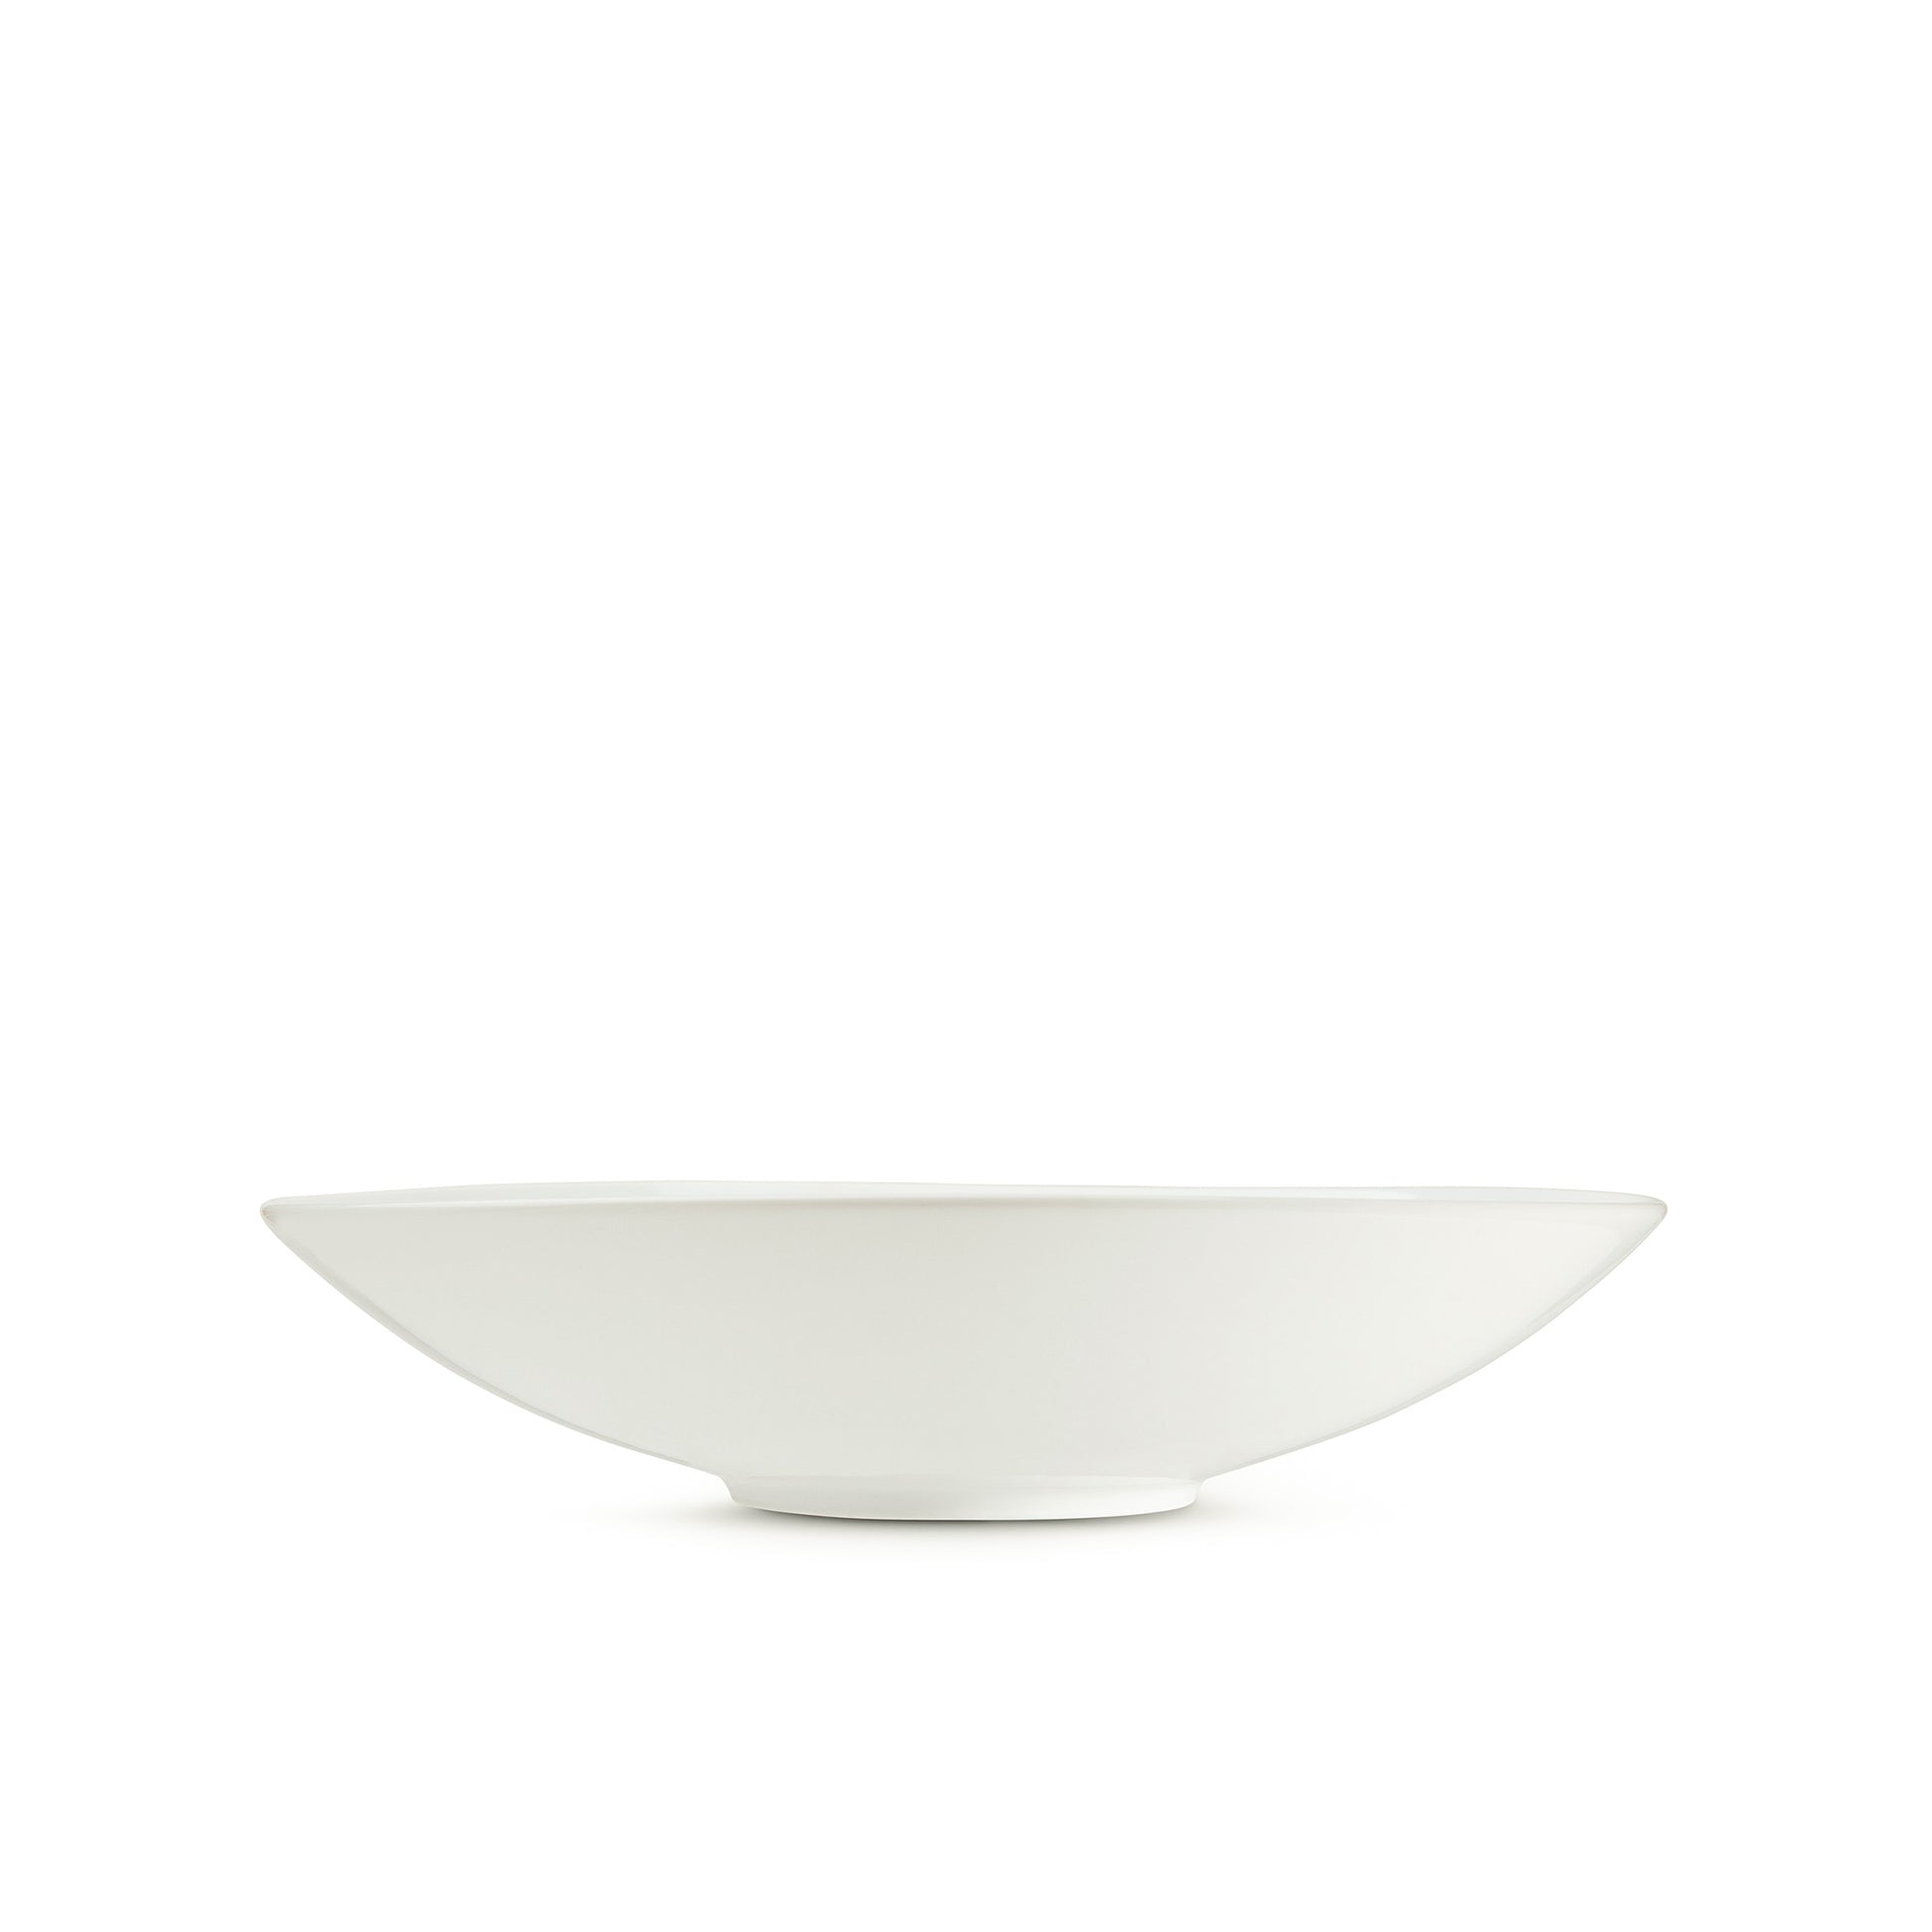 8" white porcelain coupe bowl, salad bowl, soup bowl, horizontal view, media 1 of 4